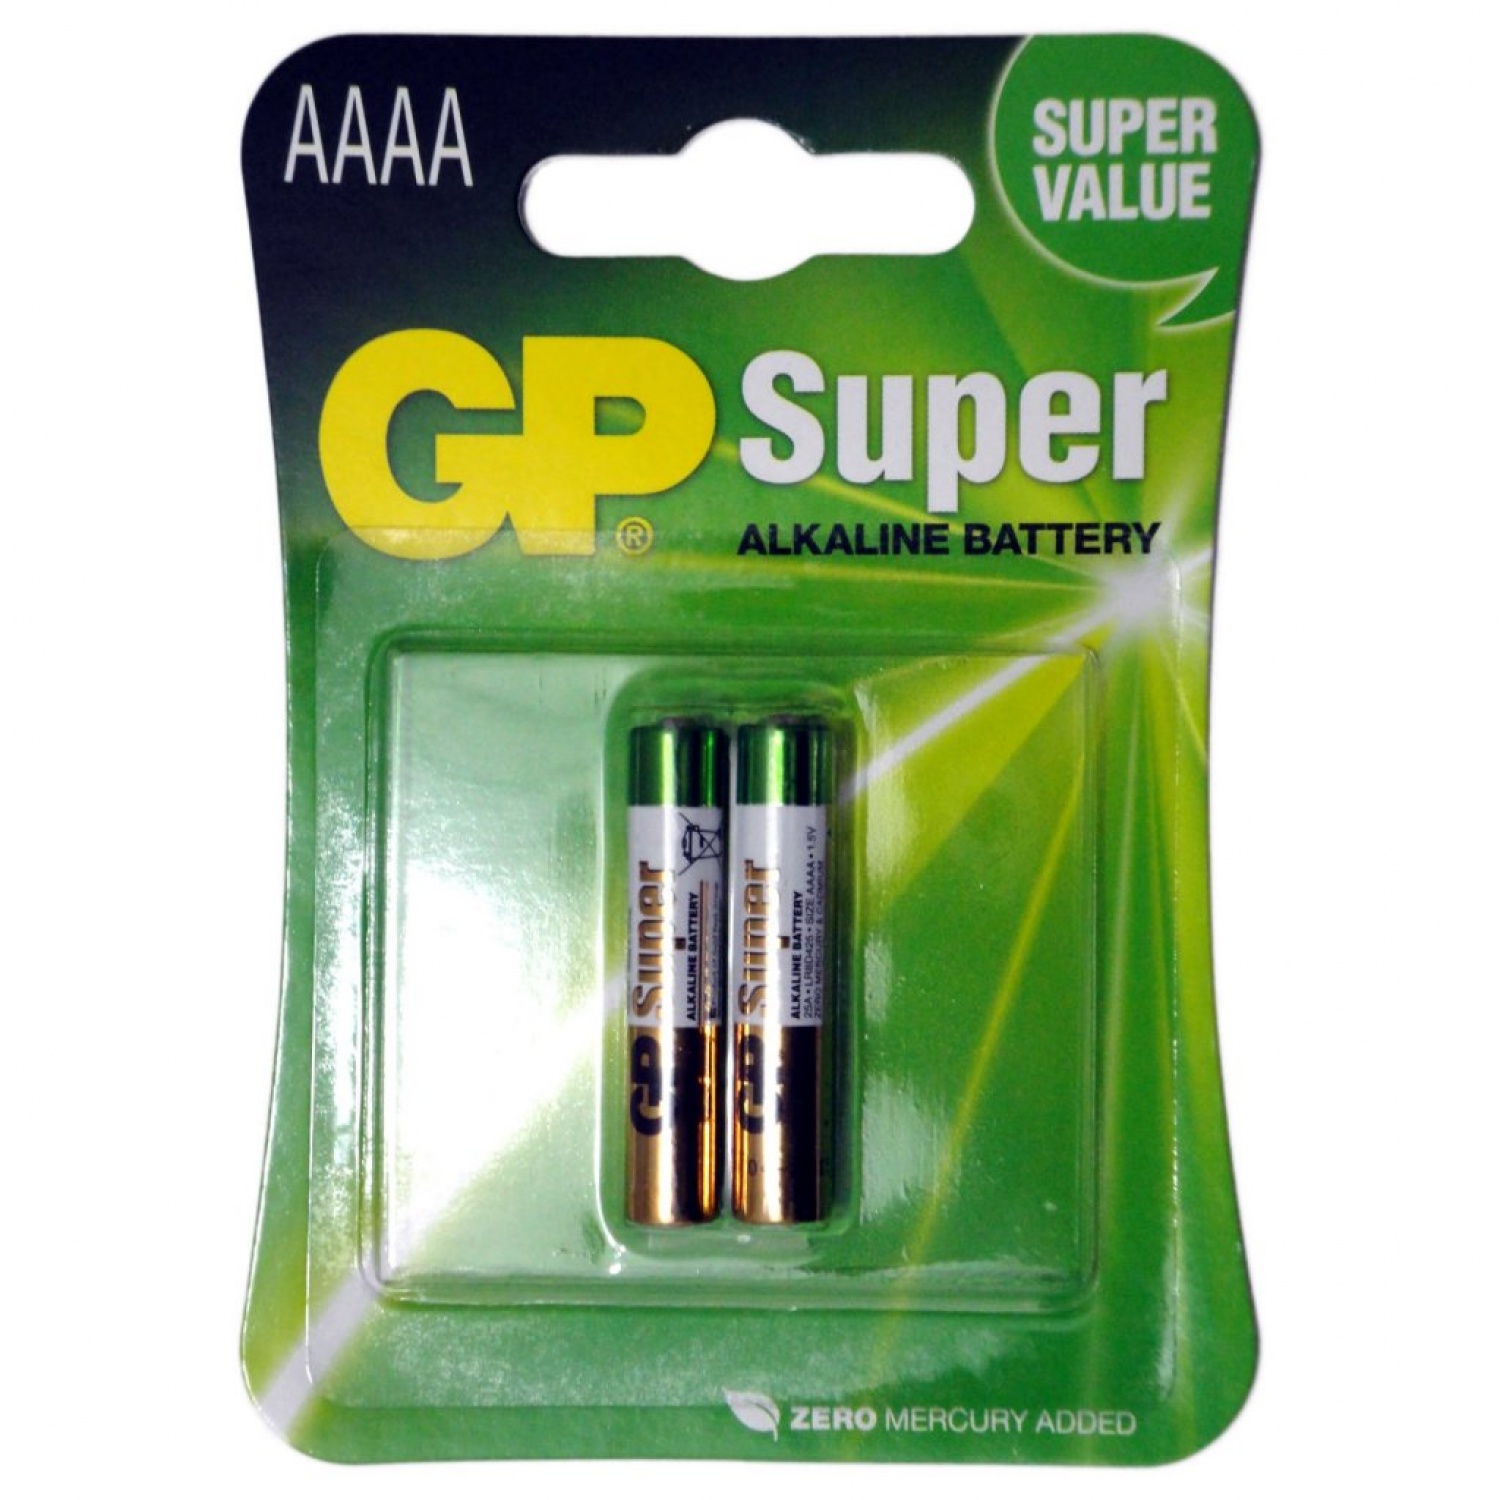 Pila AAAA Super Alkaline Battery - Paquete de dos (2) baterías (Ref. 4A) -  Marca GP - Capital Colombia